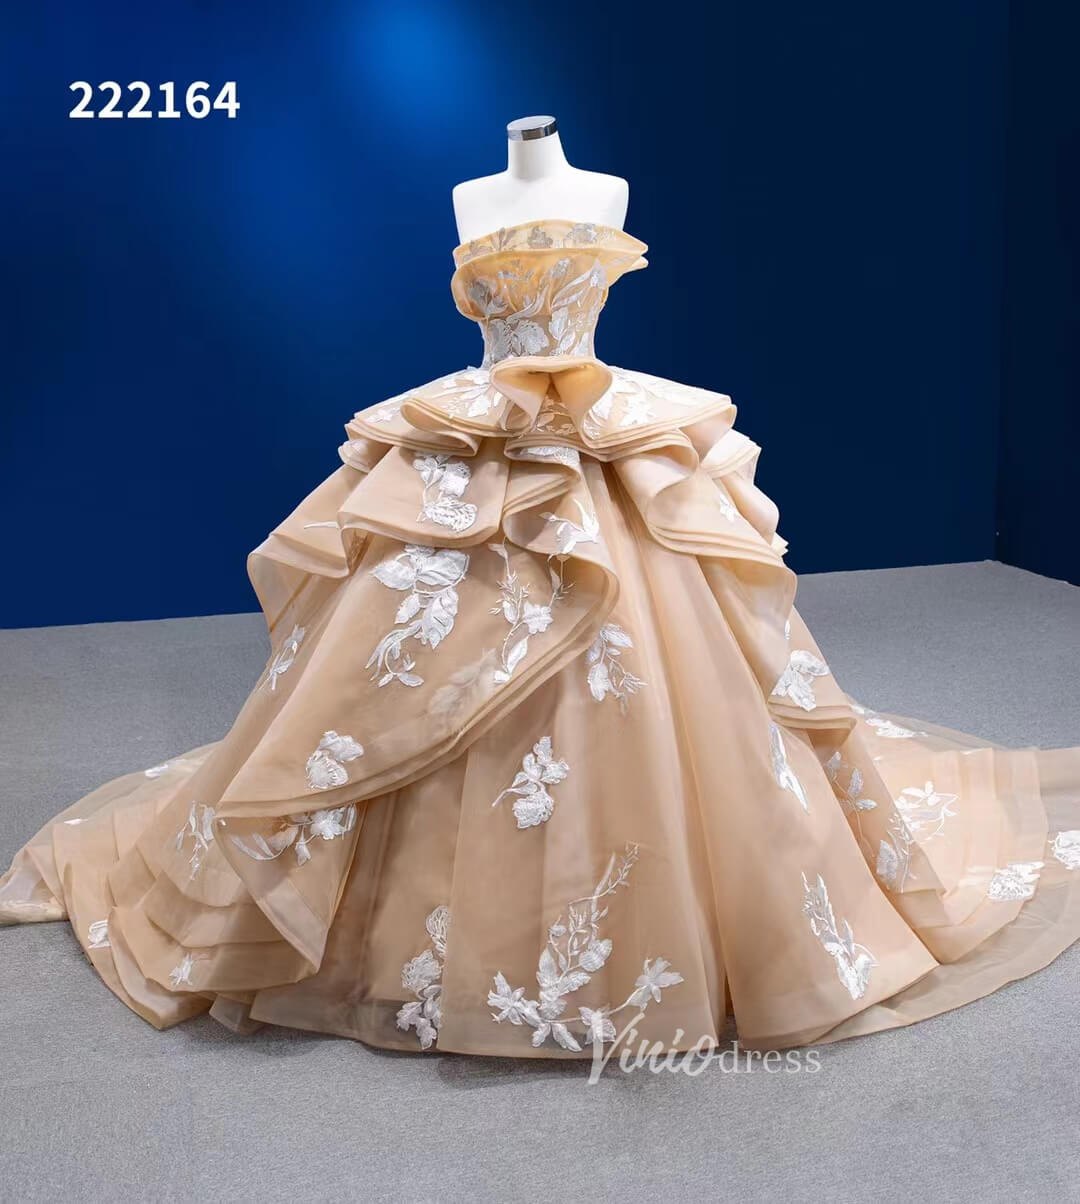 Light Gold Debut Gown Layered Princess Ball Gown Wedding Dresses 222164-Quinceanera Dresses-Viniodress-Viniodress